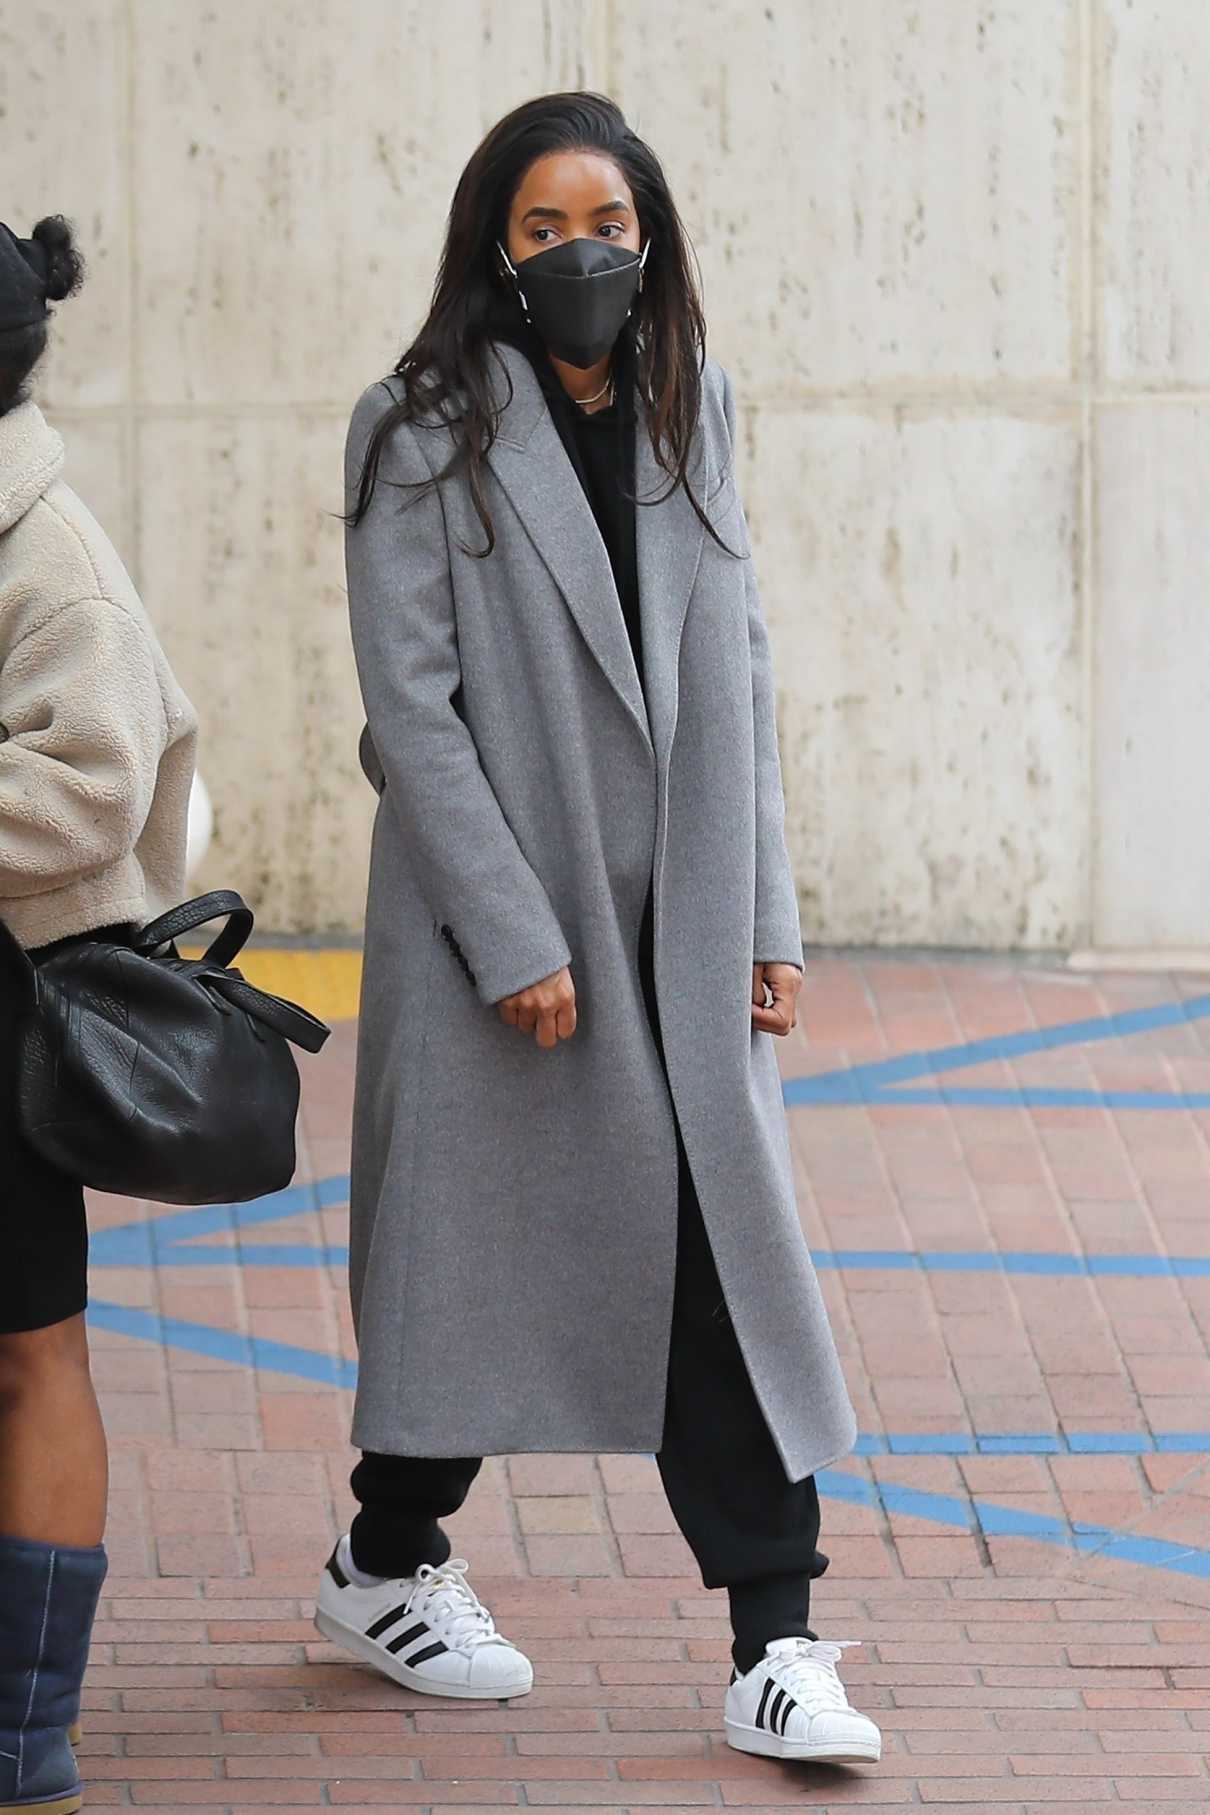 Kelly Rowland in a Grey Coat